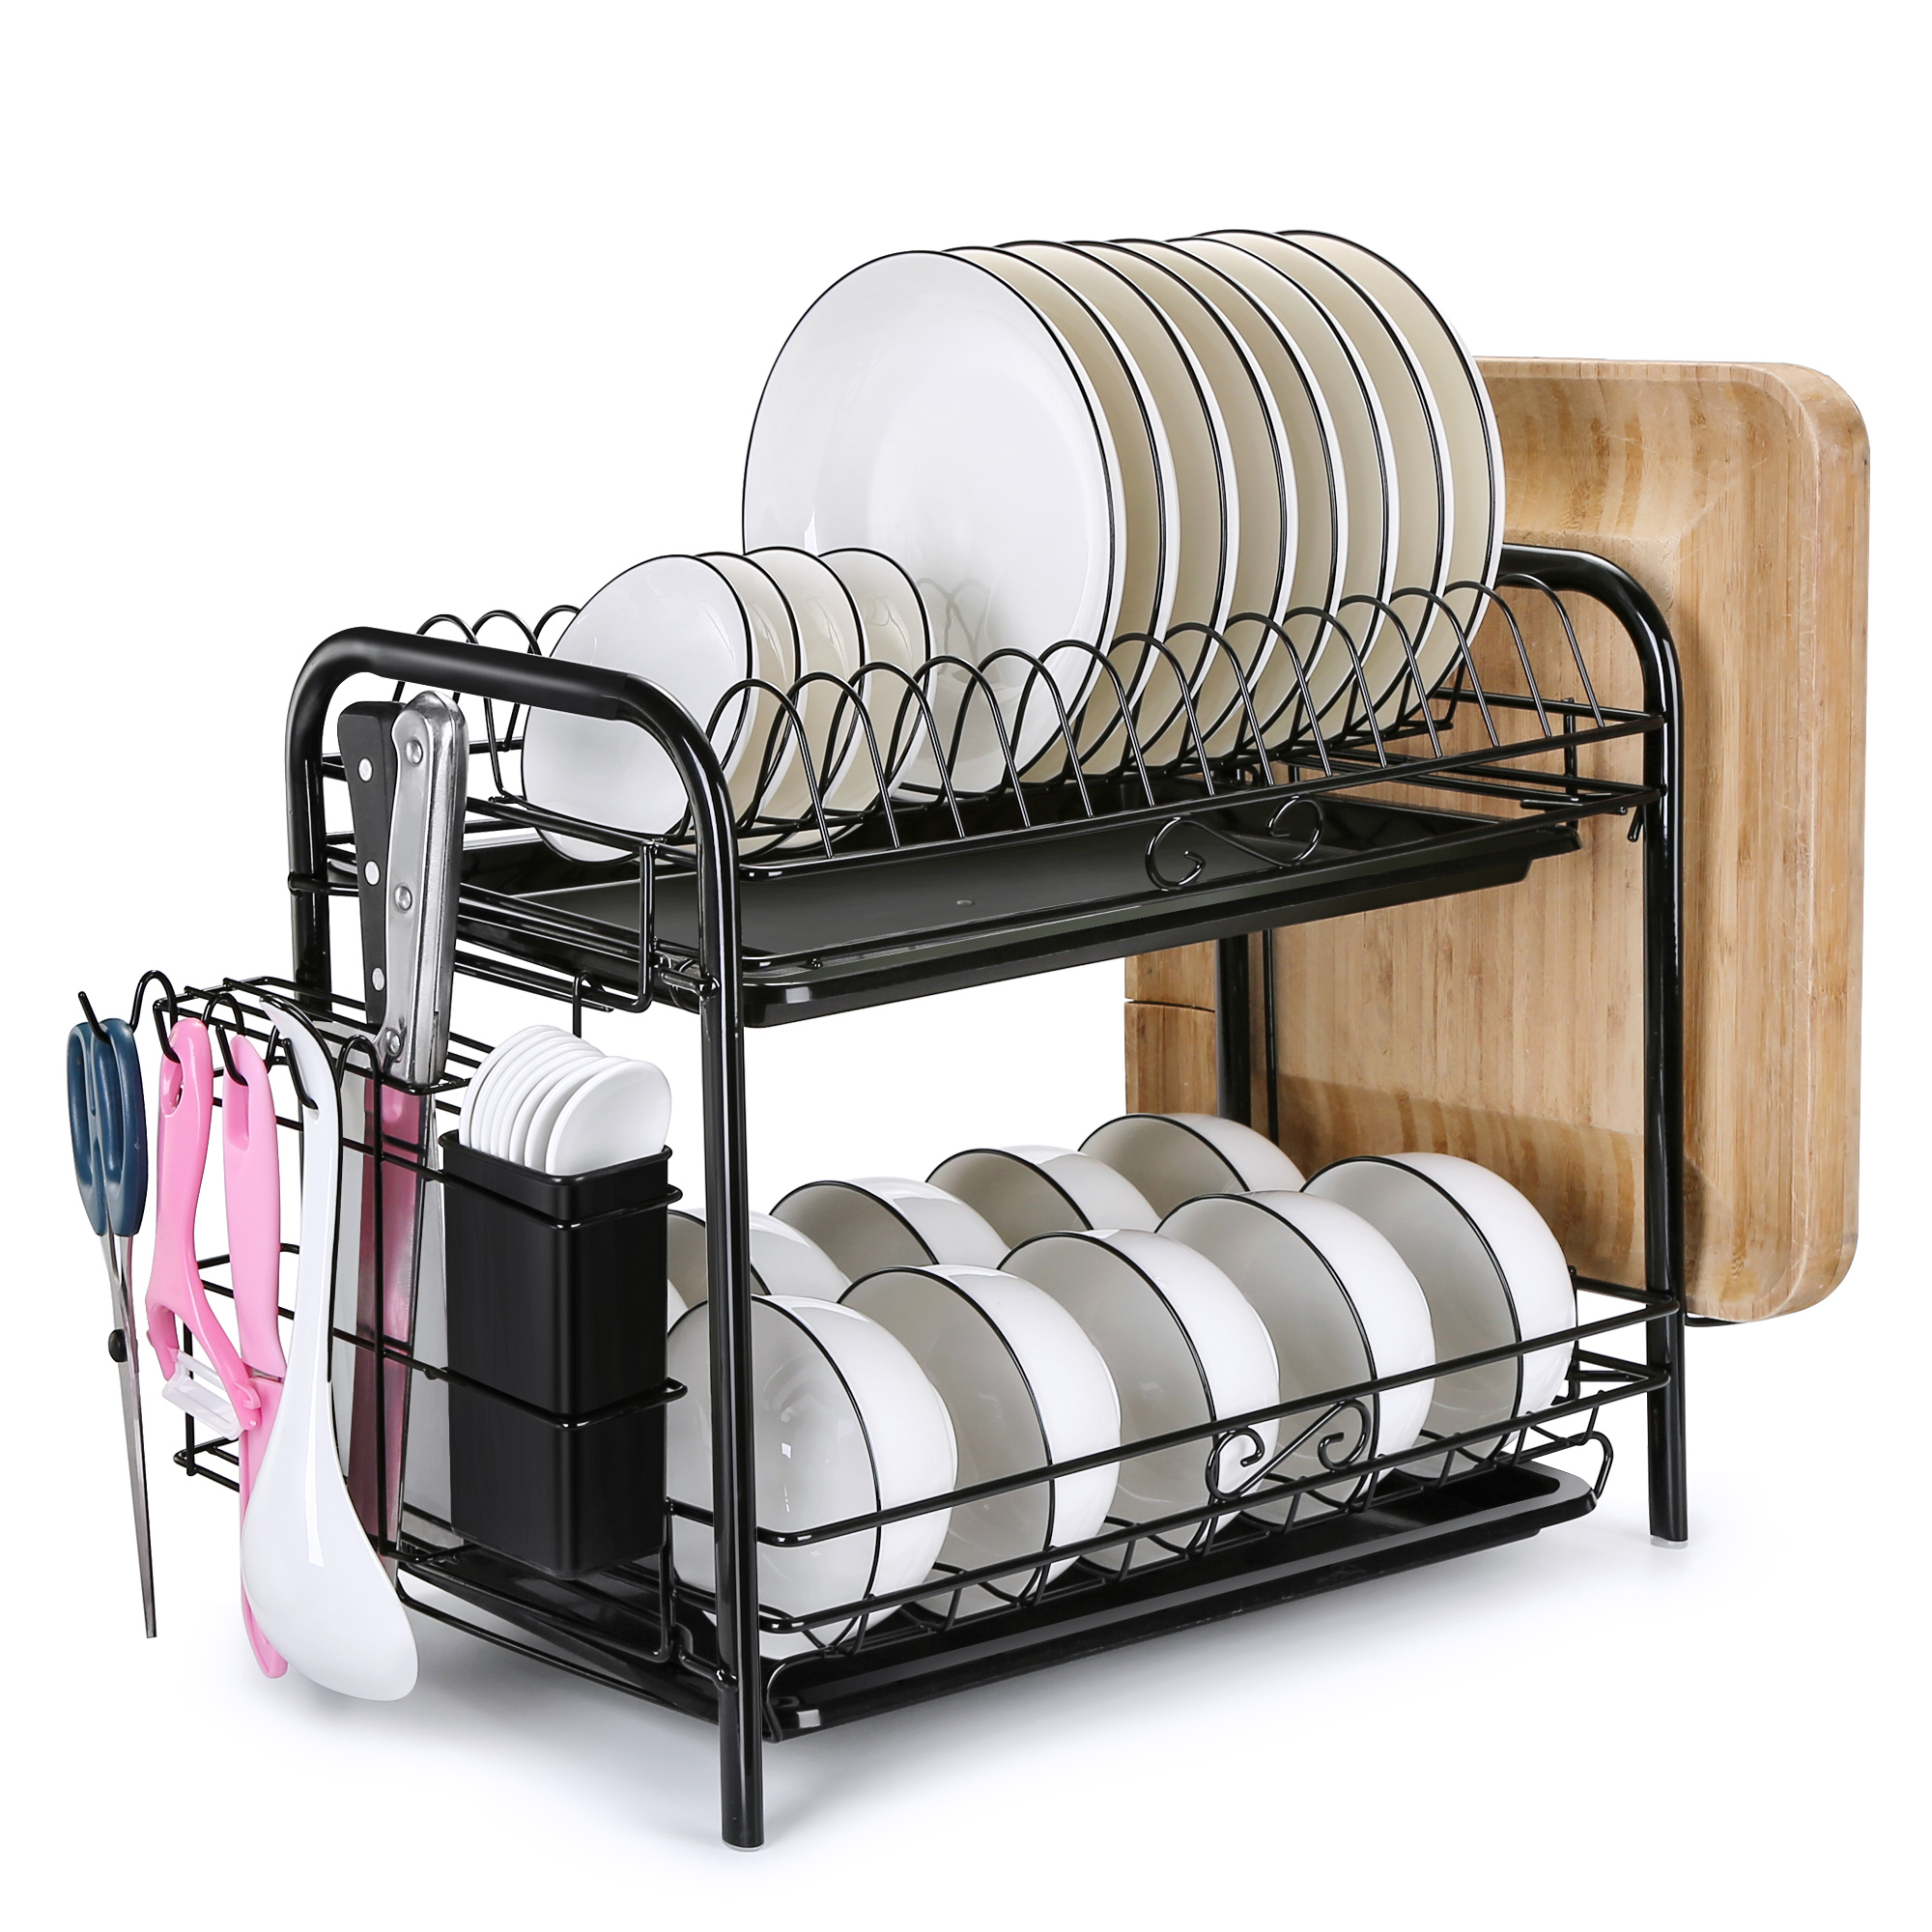 Large Capacity Dish Rack 2 Tier w// Utensil Holder Drainer Drying Kitchen Storage